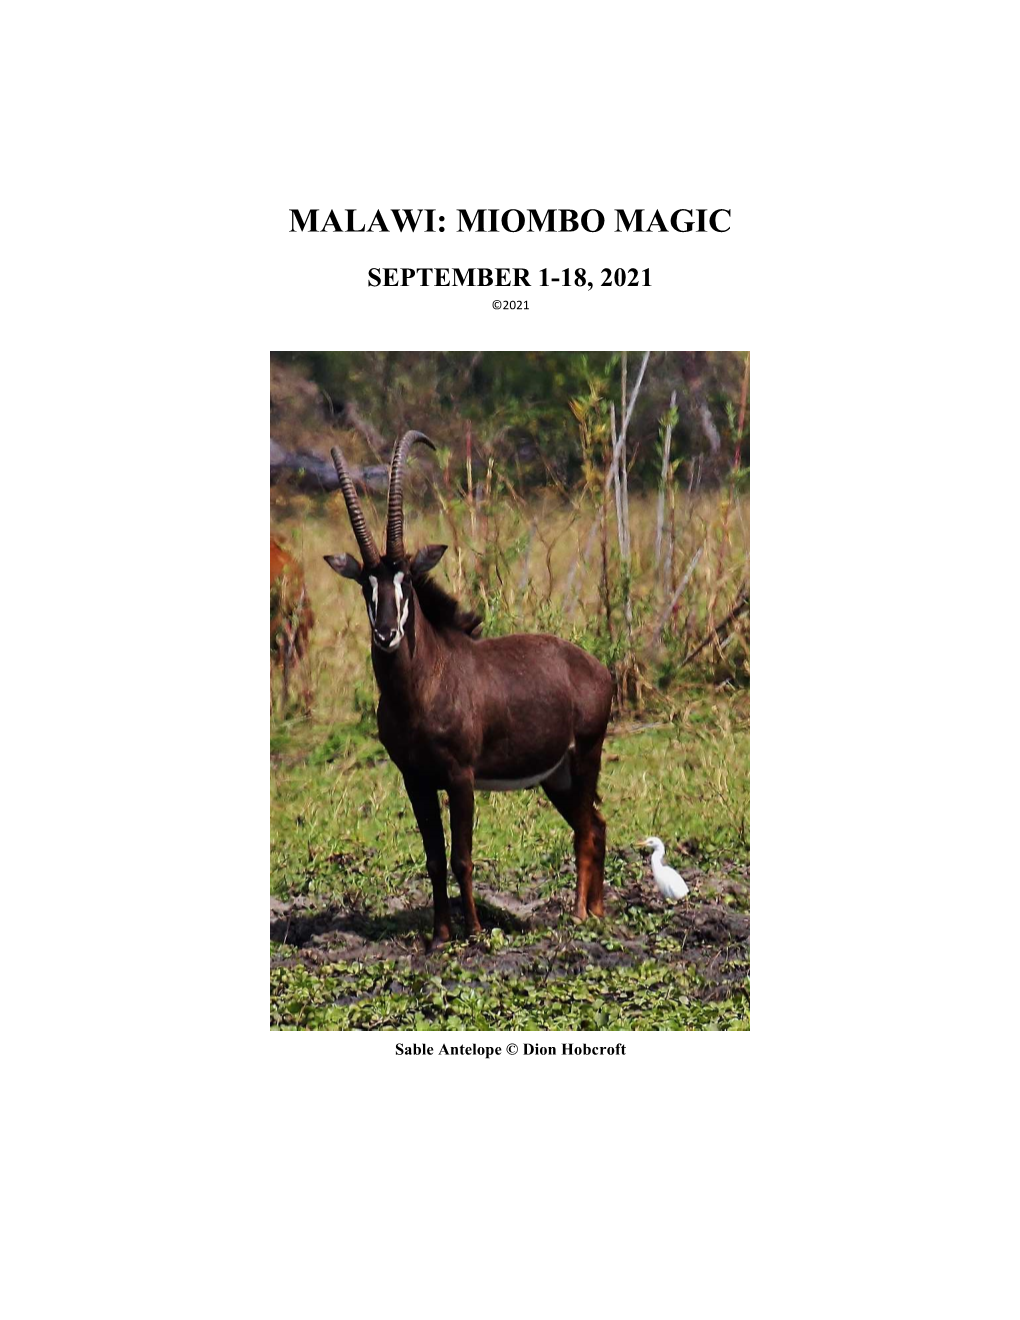 Malawi: Miombo Magic September 1-18, 2021 ©2021